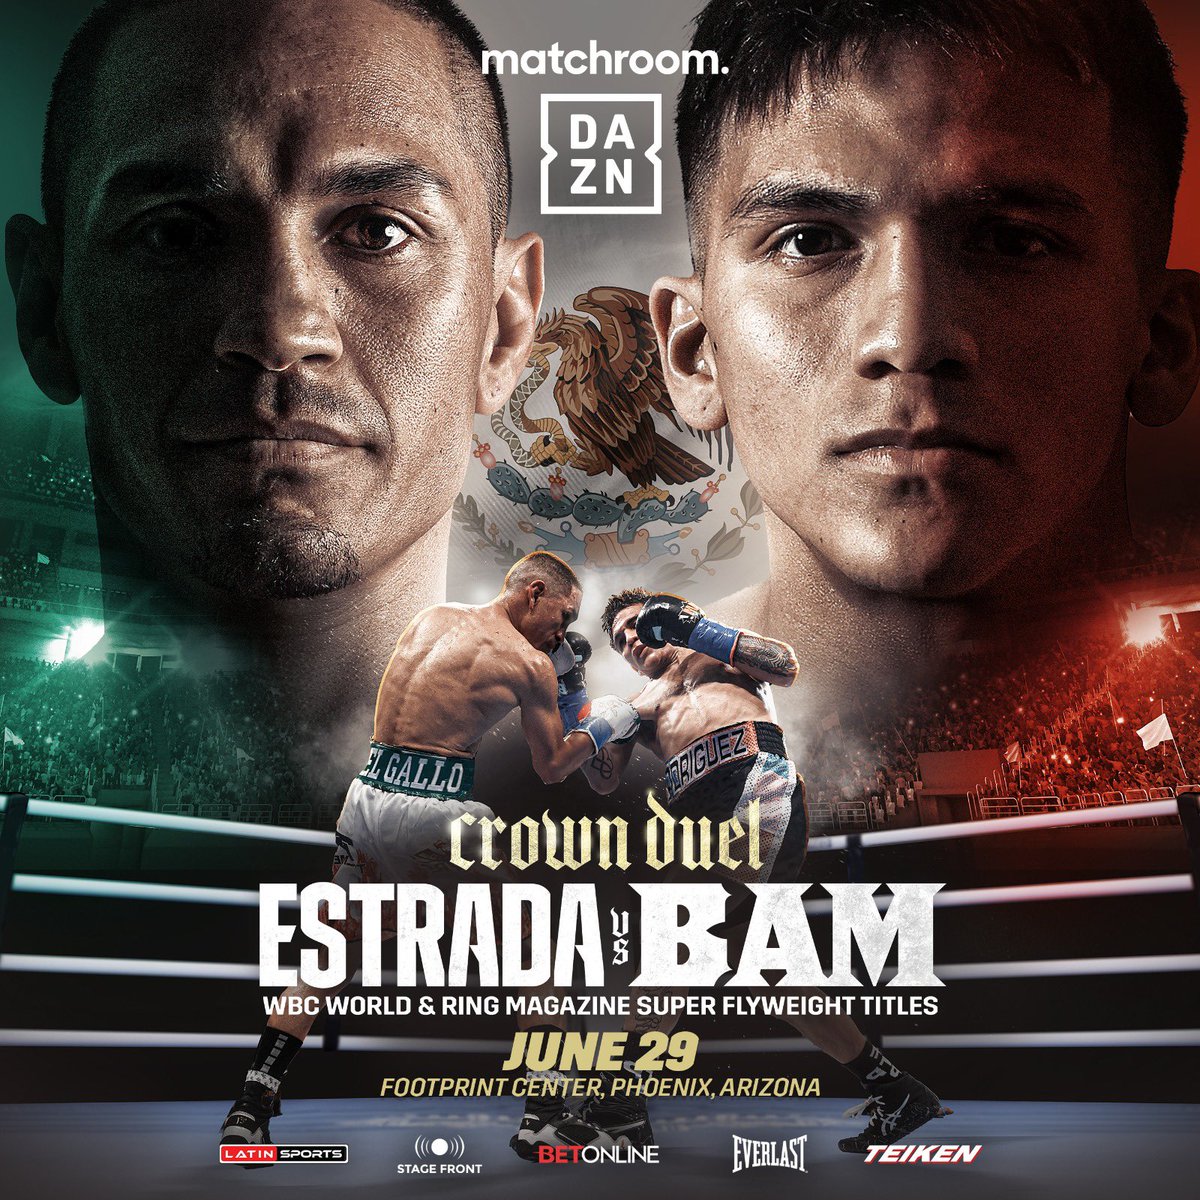 Great Fight 👏🏻👏🏻👏🏻🥊🥊🔥🔥🔥 #EstradaBam